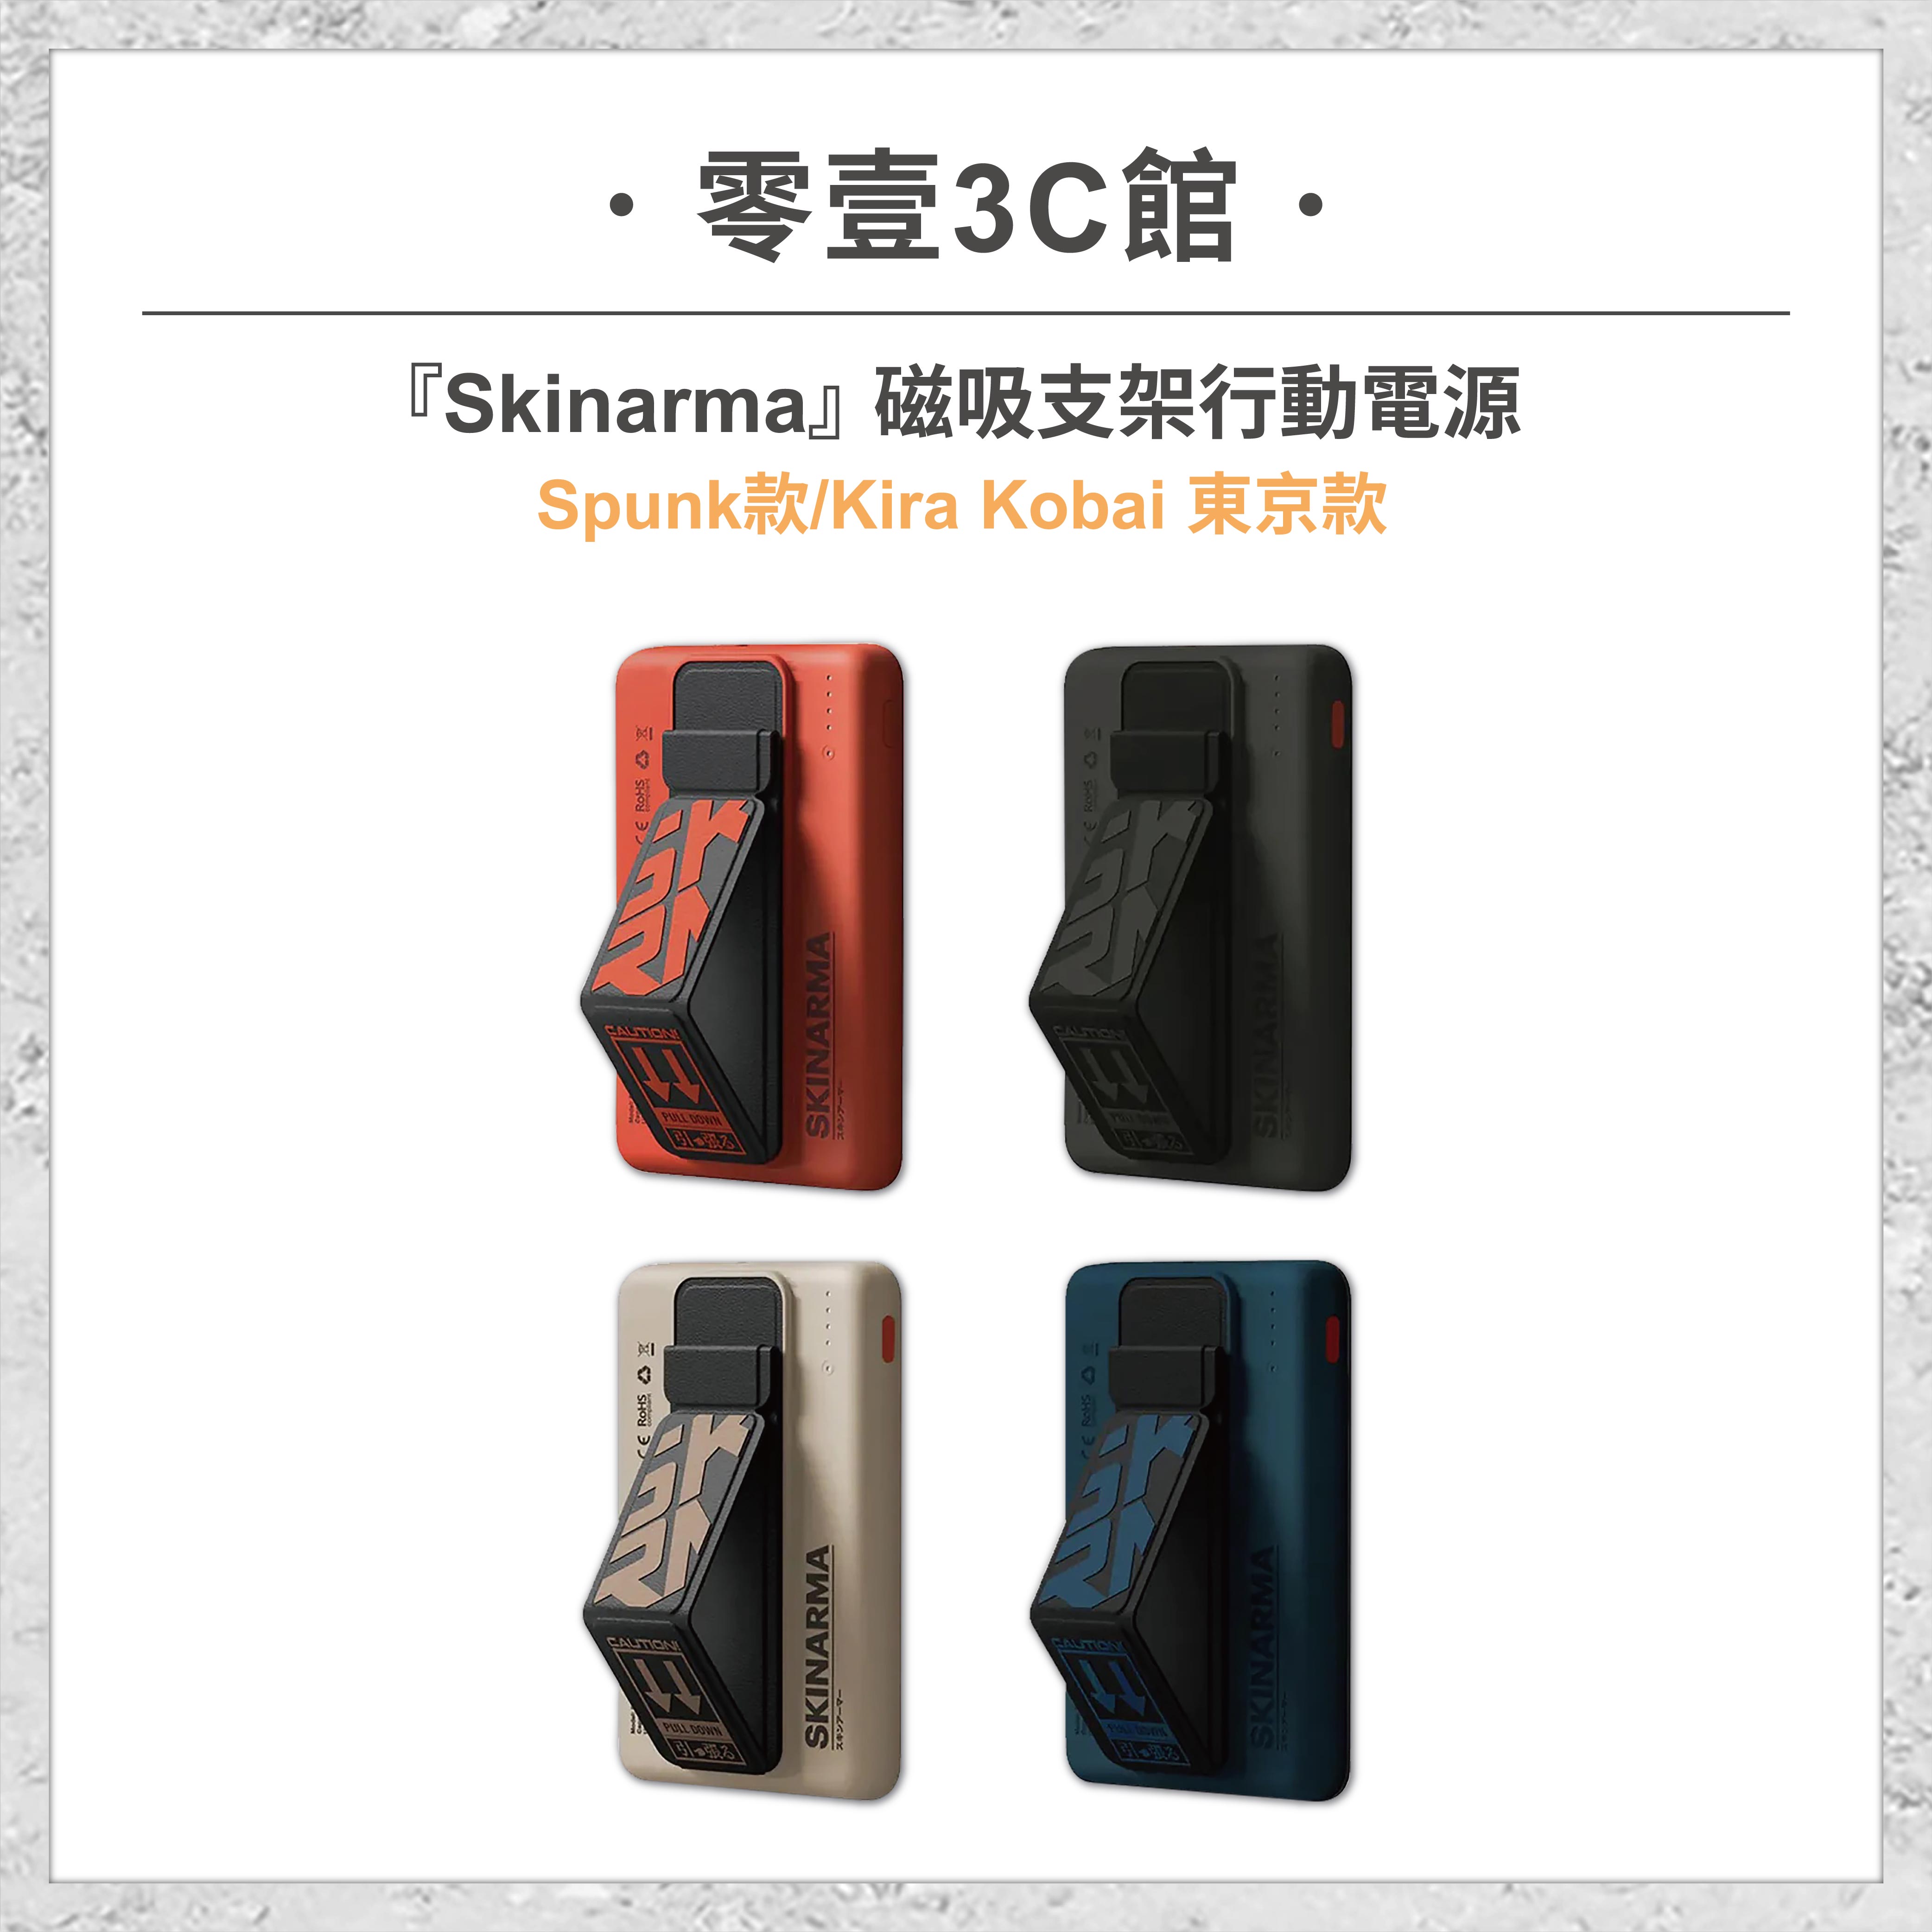 『Skinarma』磁吸支架行動電源 Spunk/Kira Kobai 東京款 Magsafe磁吸 隨身行動電源